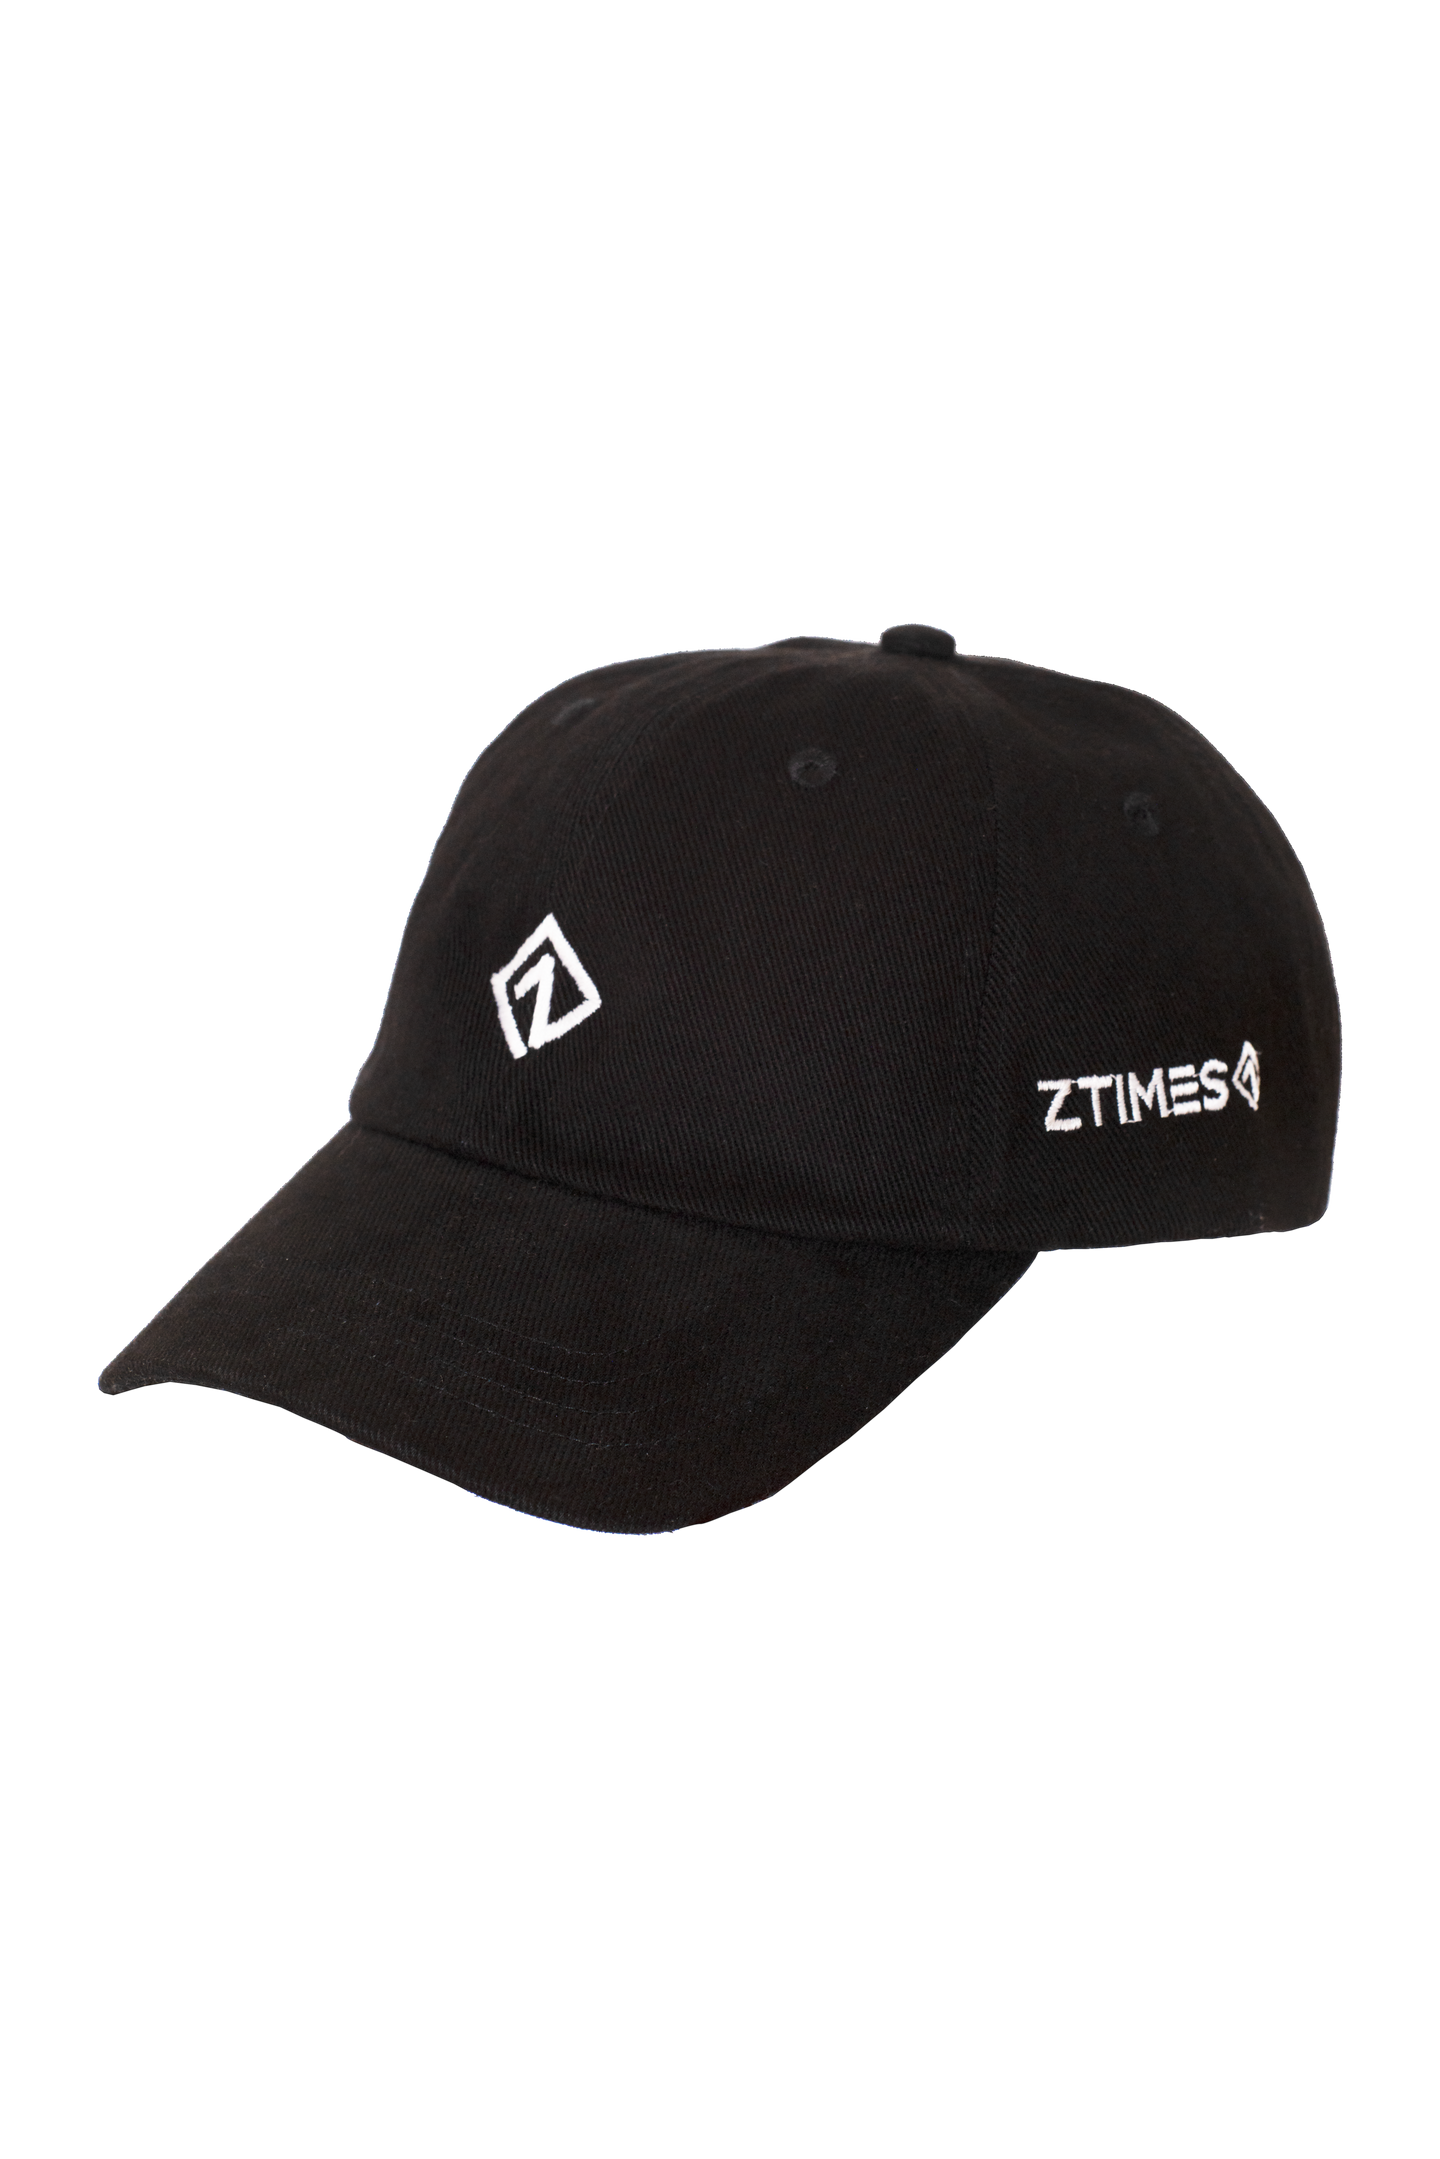 ZtimesZ Black Baseball Cap